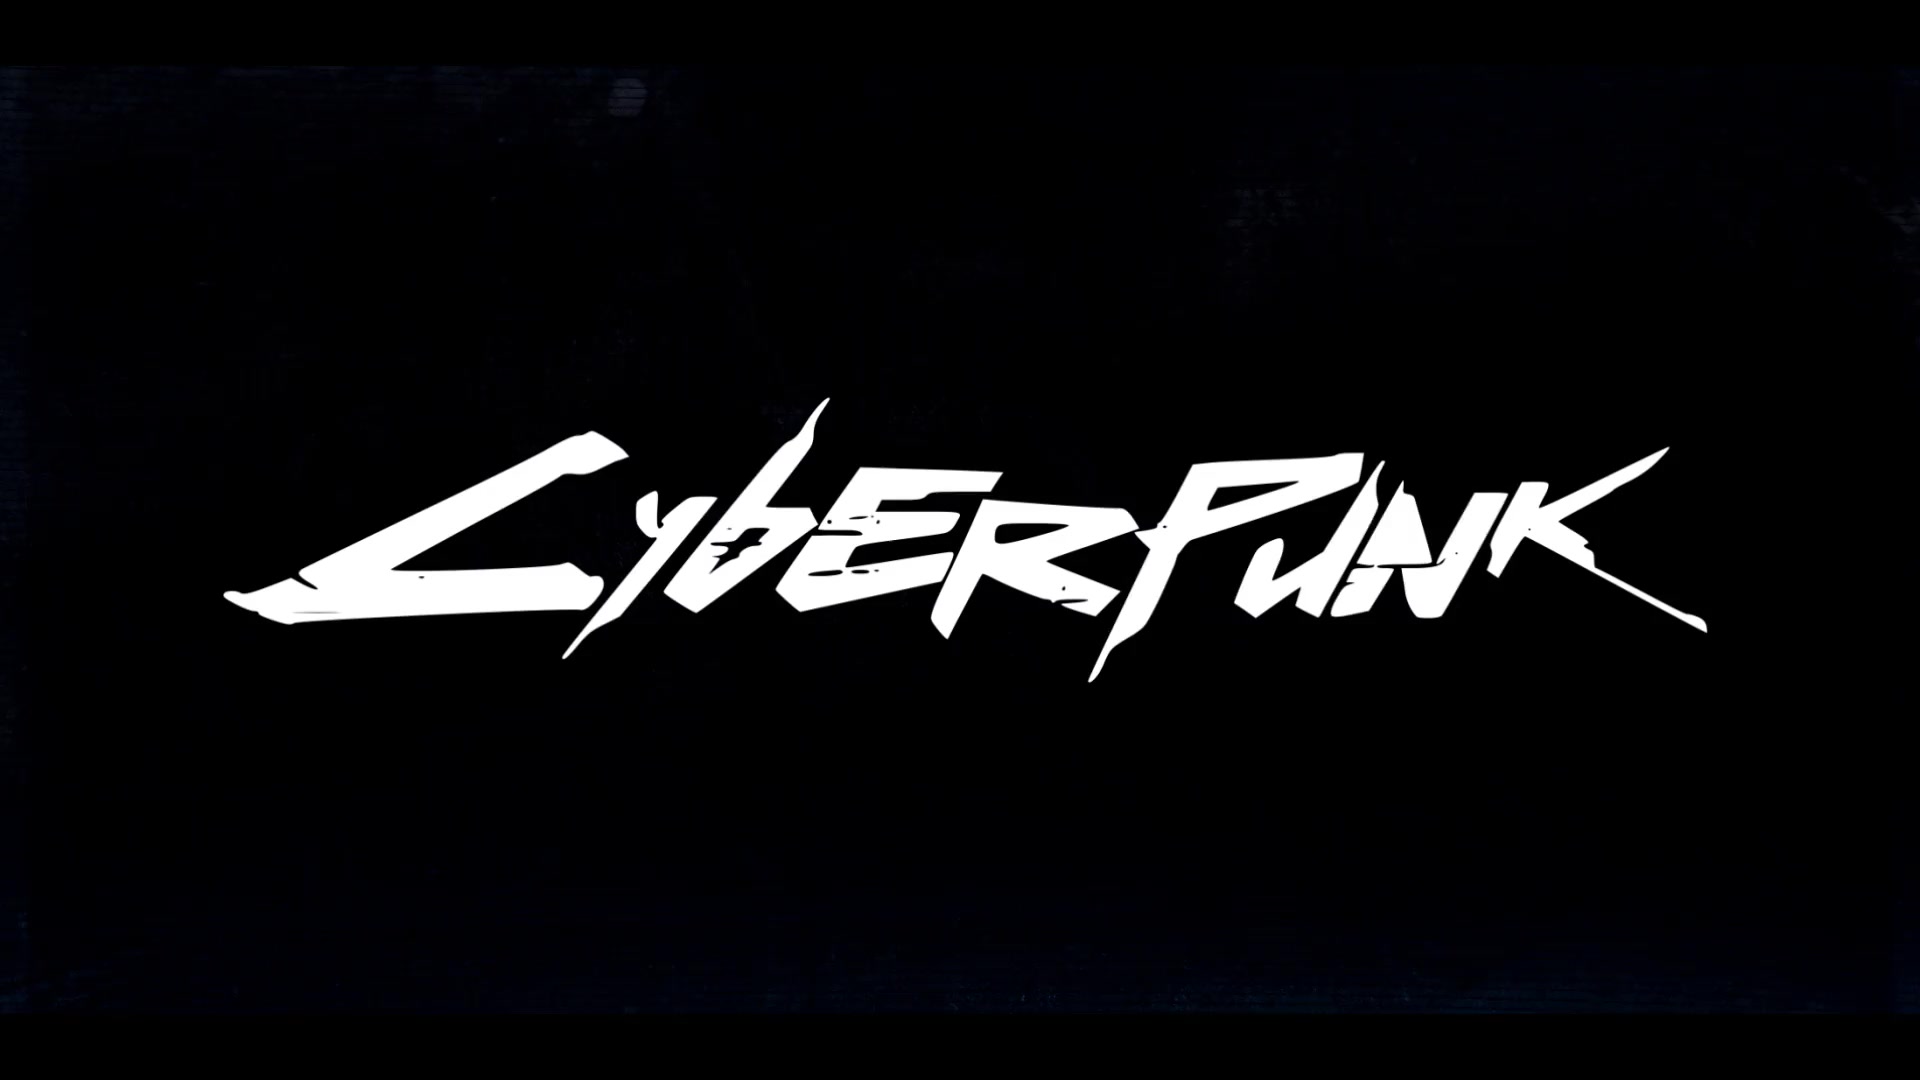 скачать логотип cyberpunk фото 57